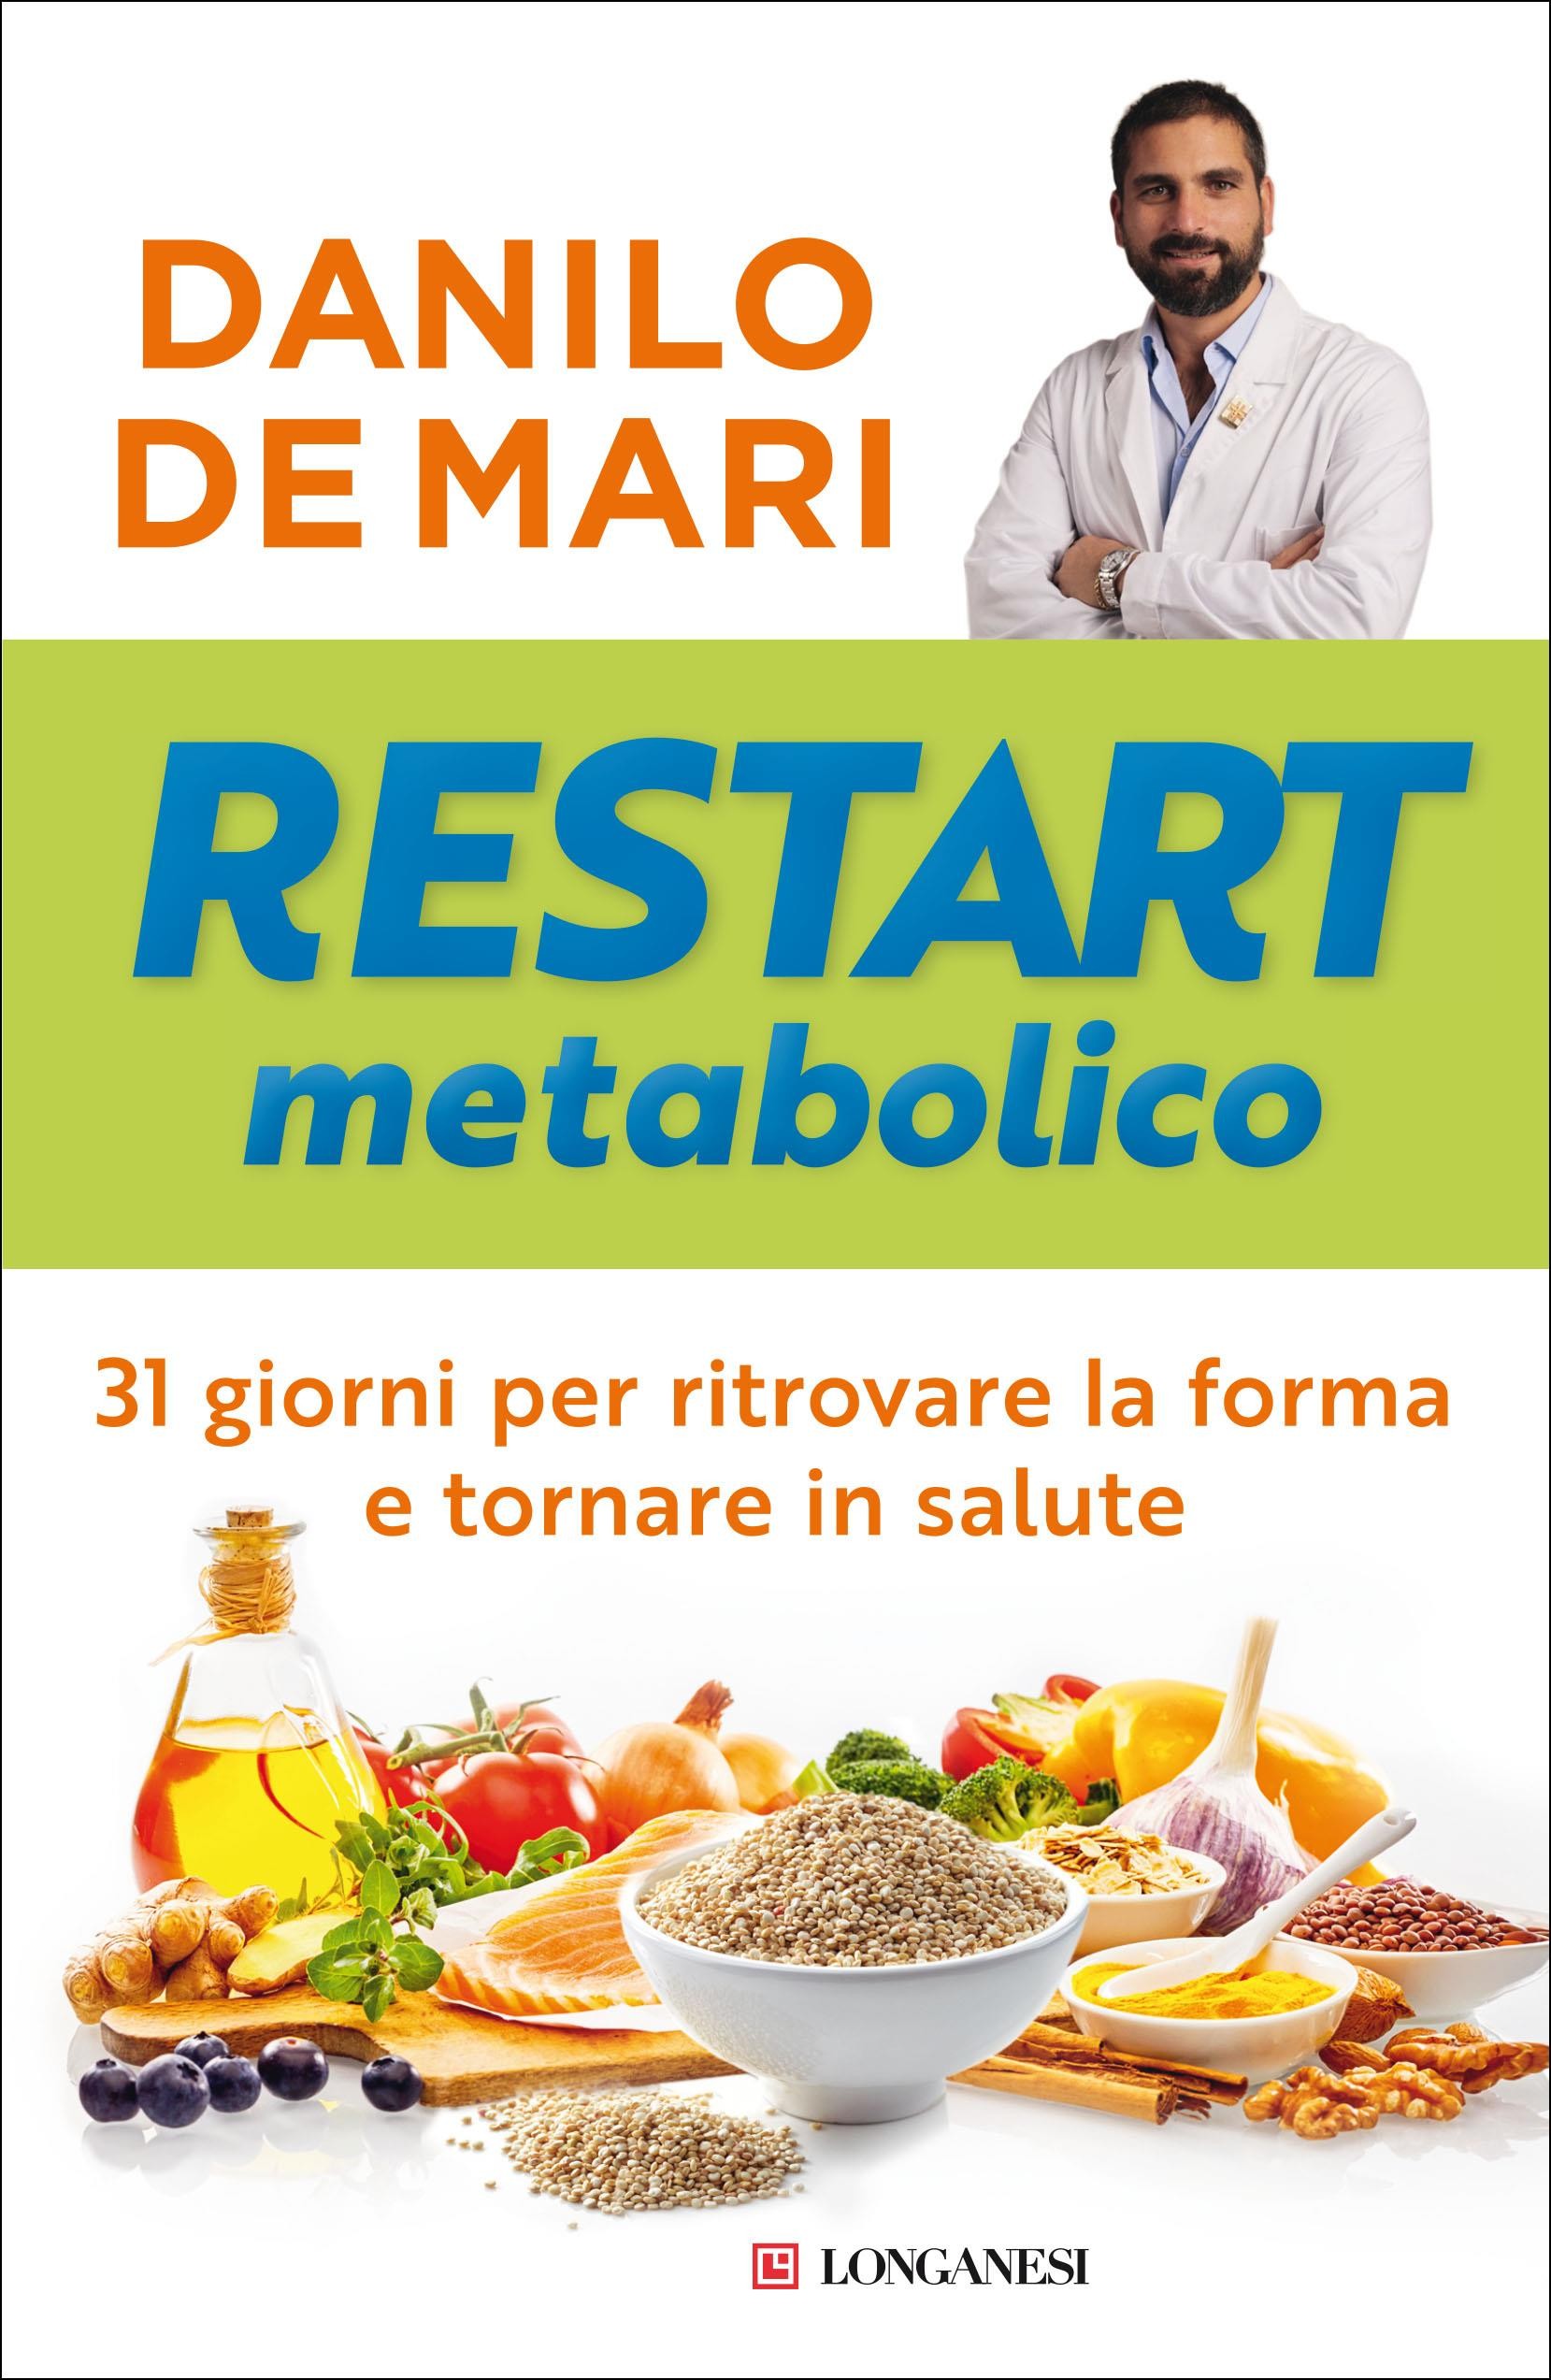 Restart metabolico - Librerie.coop